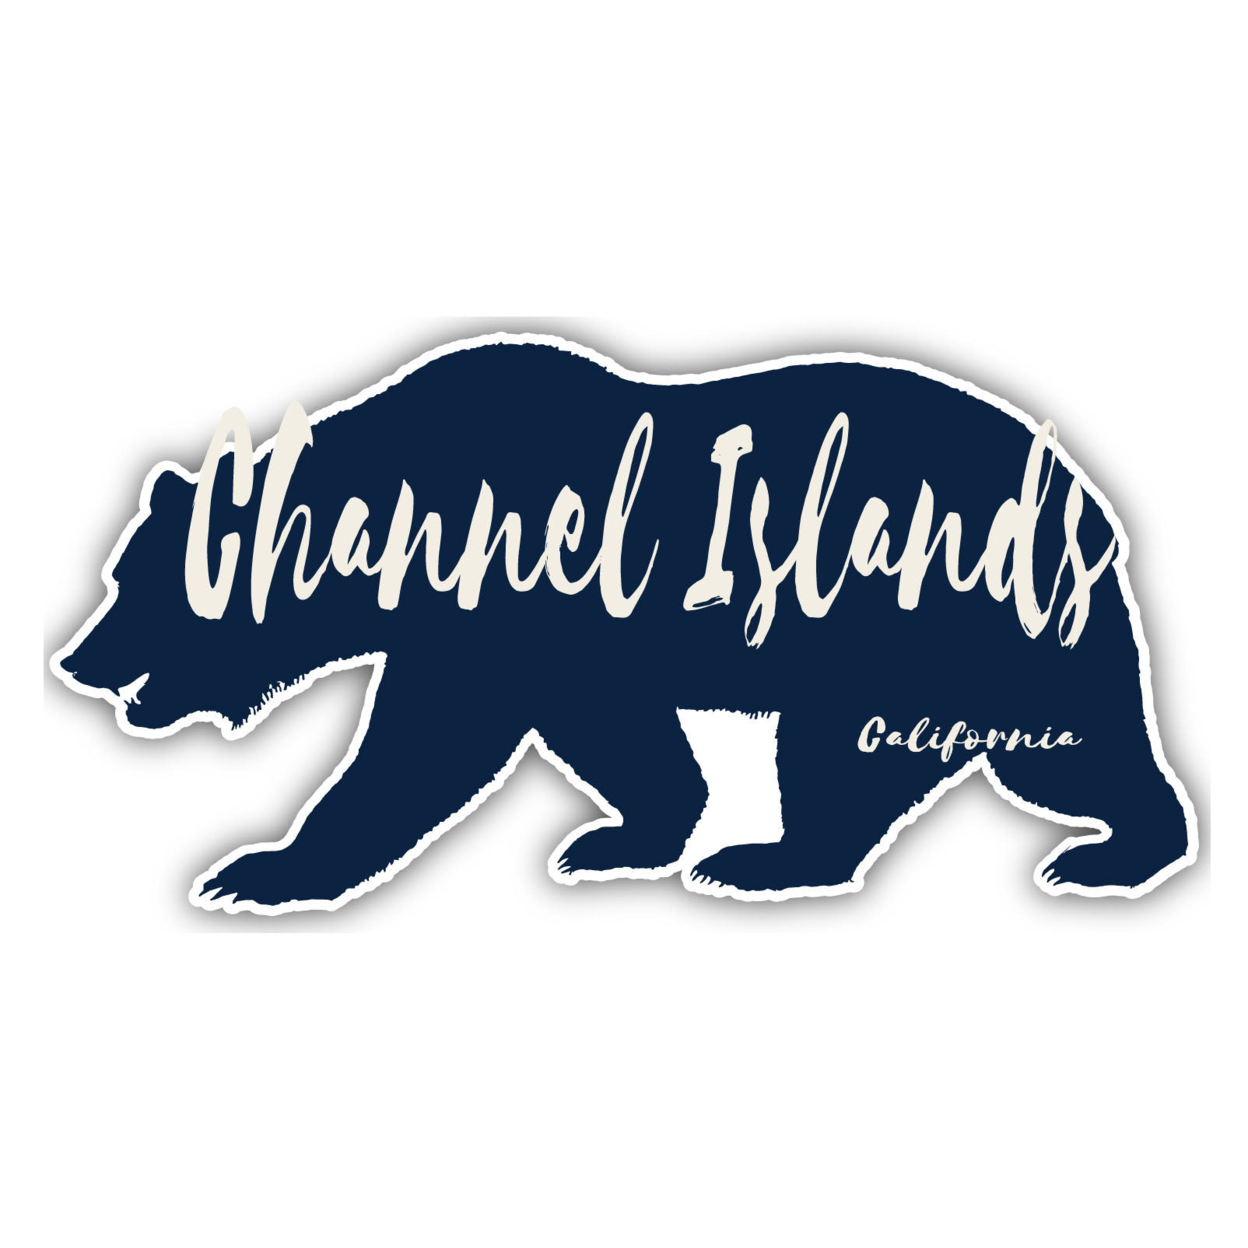 Channel Islands California Souvenir Decorative Stickers (Choose Theme And Size) - Single Unit, 4-Inch, Bear